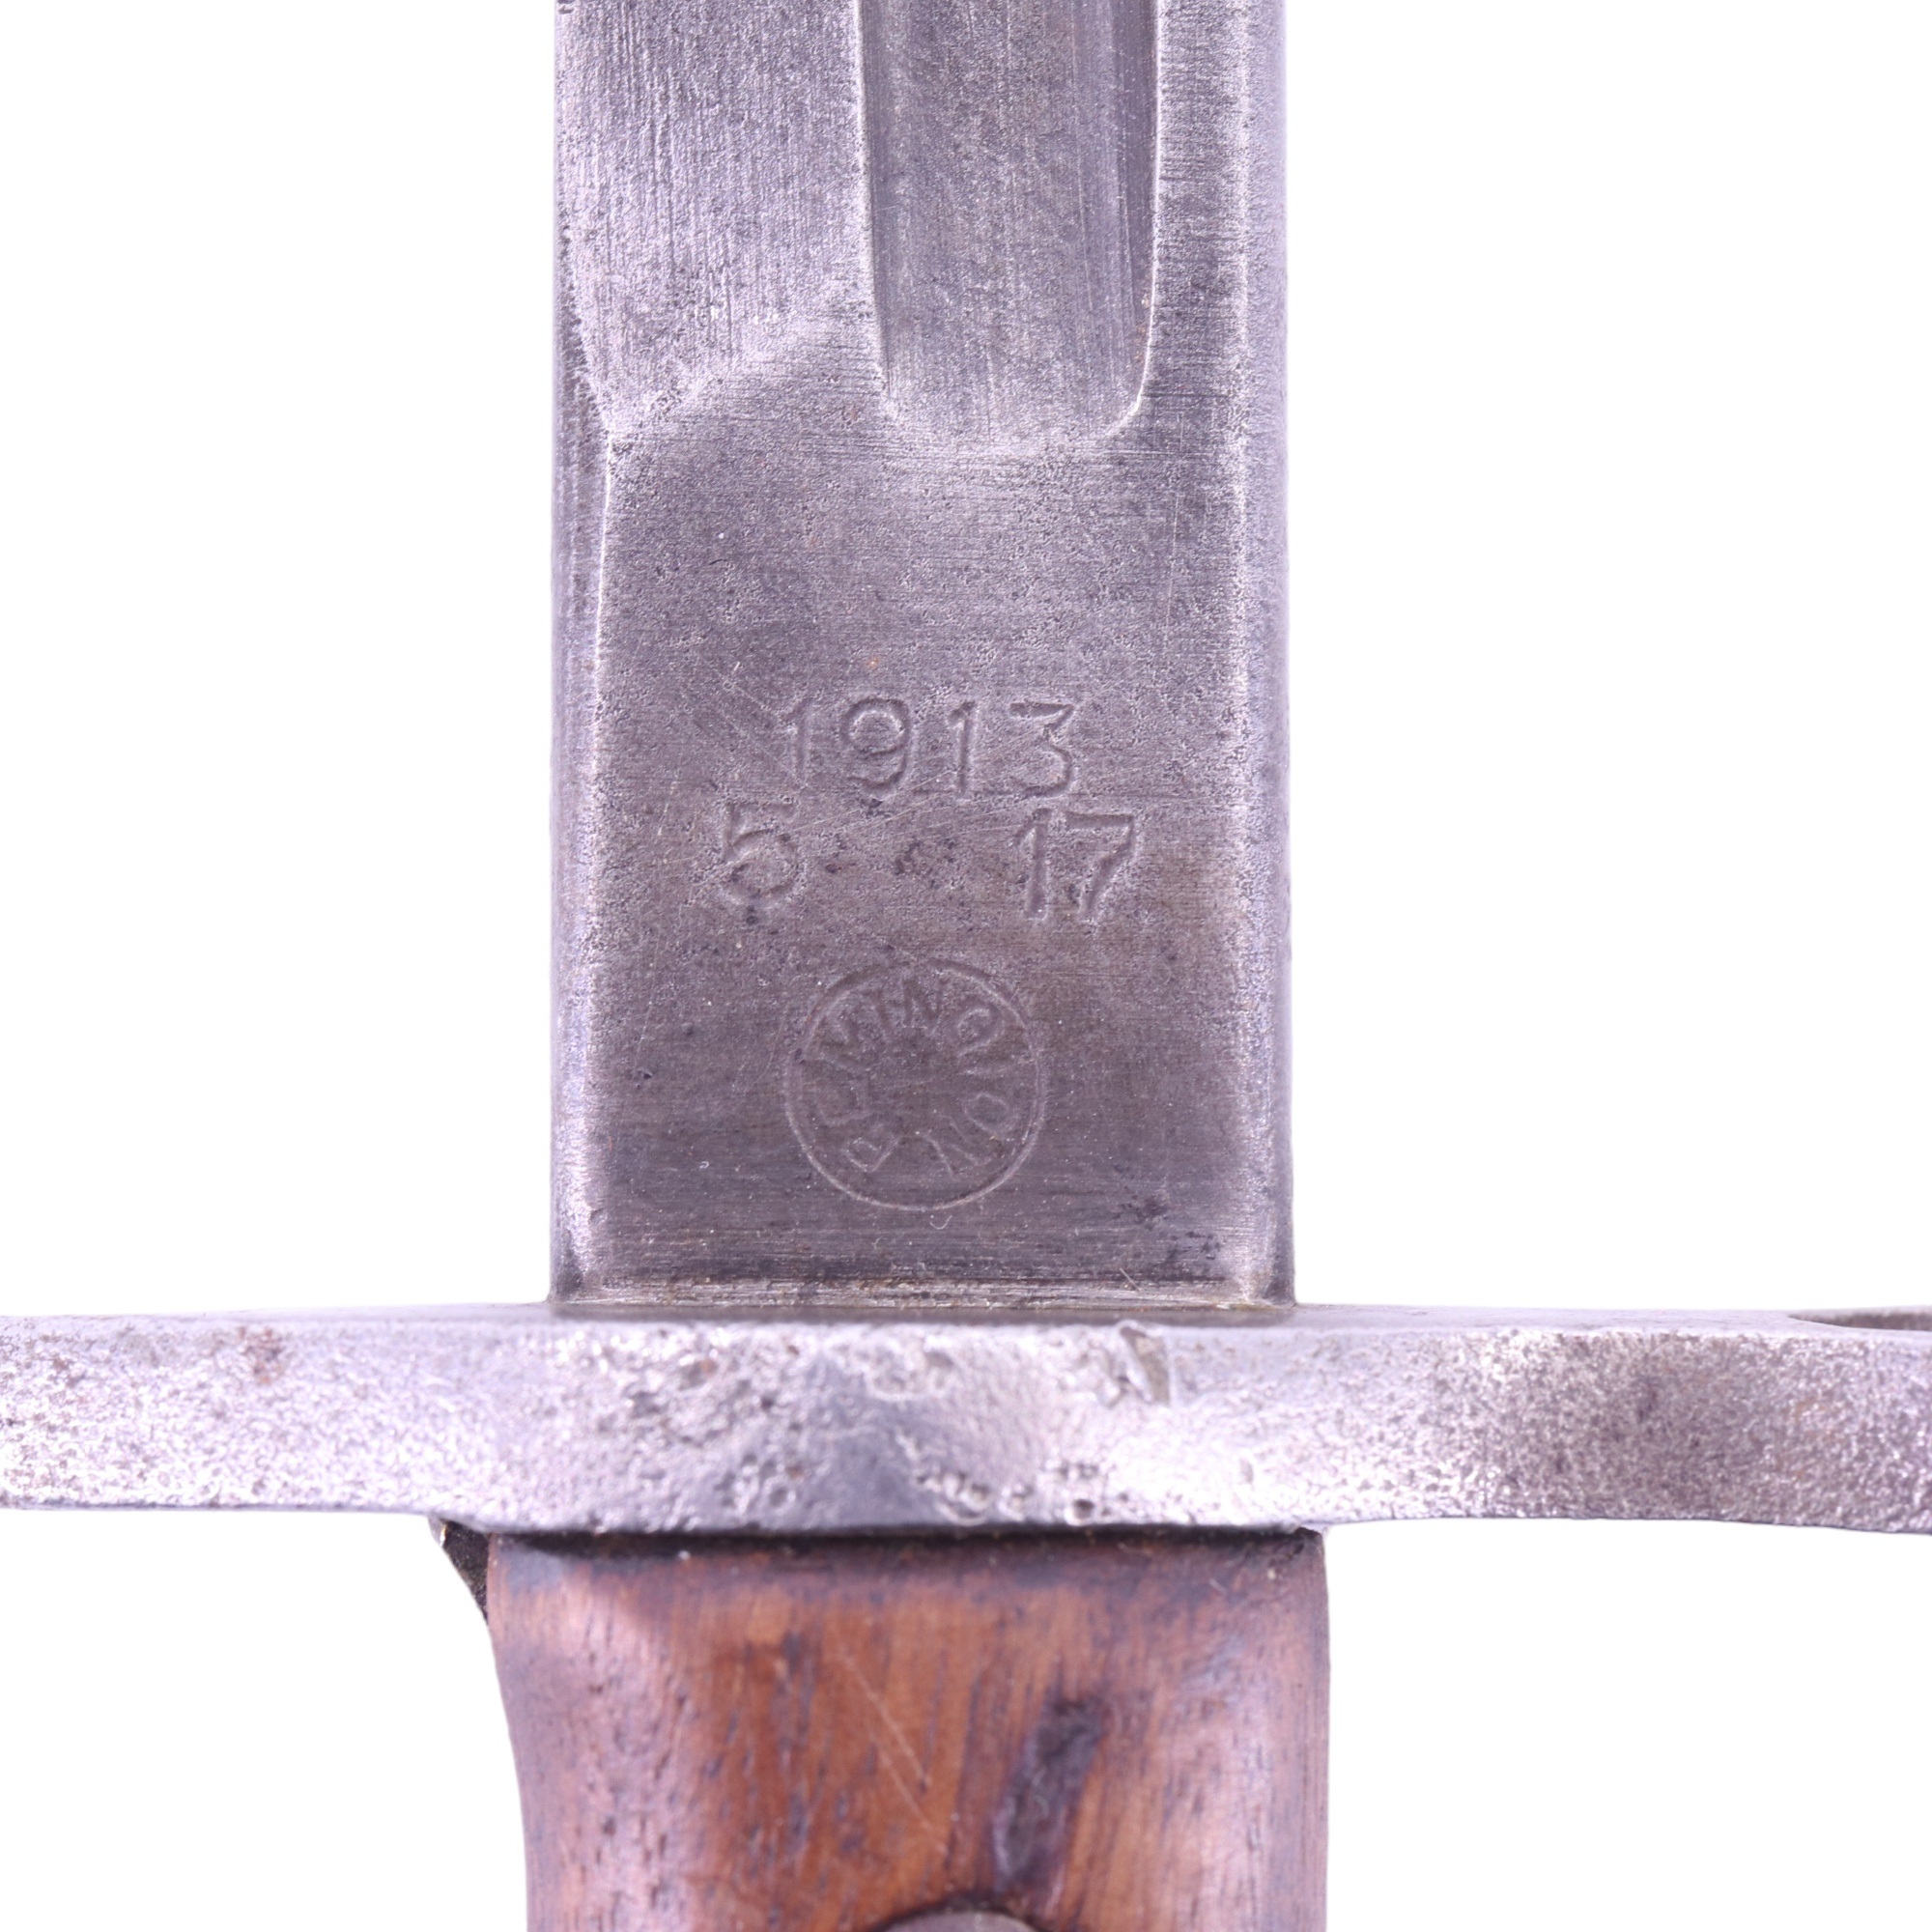 A British Pattern 1913 Bayonet by Remington - Image 3 of 4